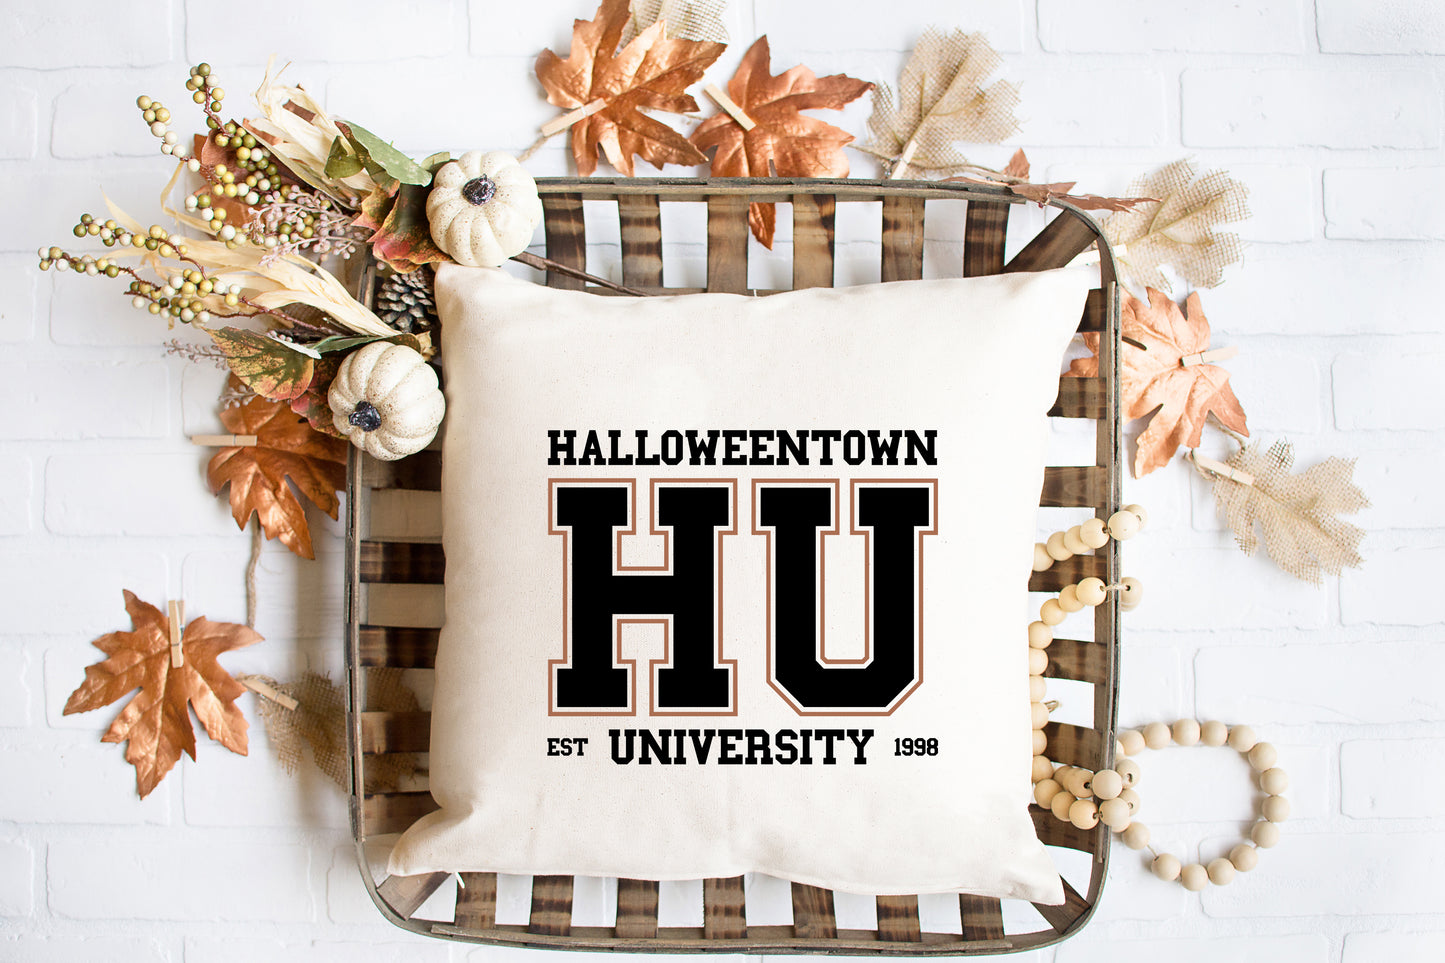 Halloweentown University 1998 | Pillow Cover